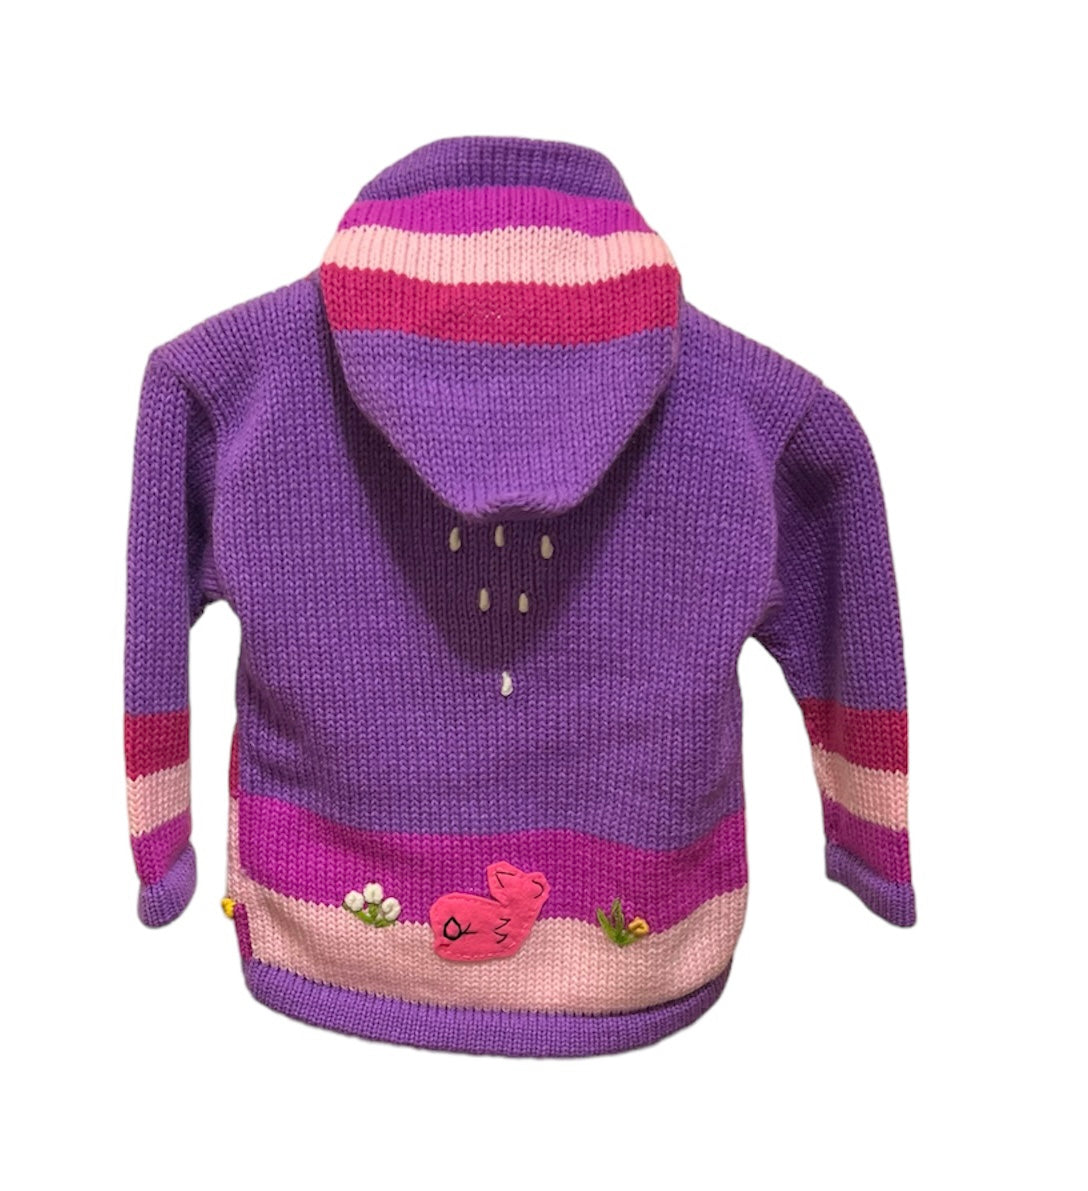 Violet girls sweater